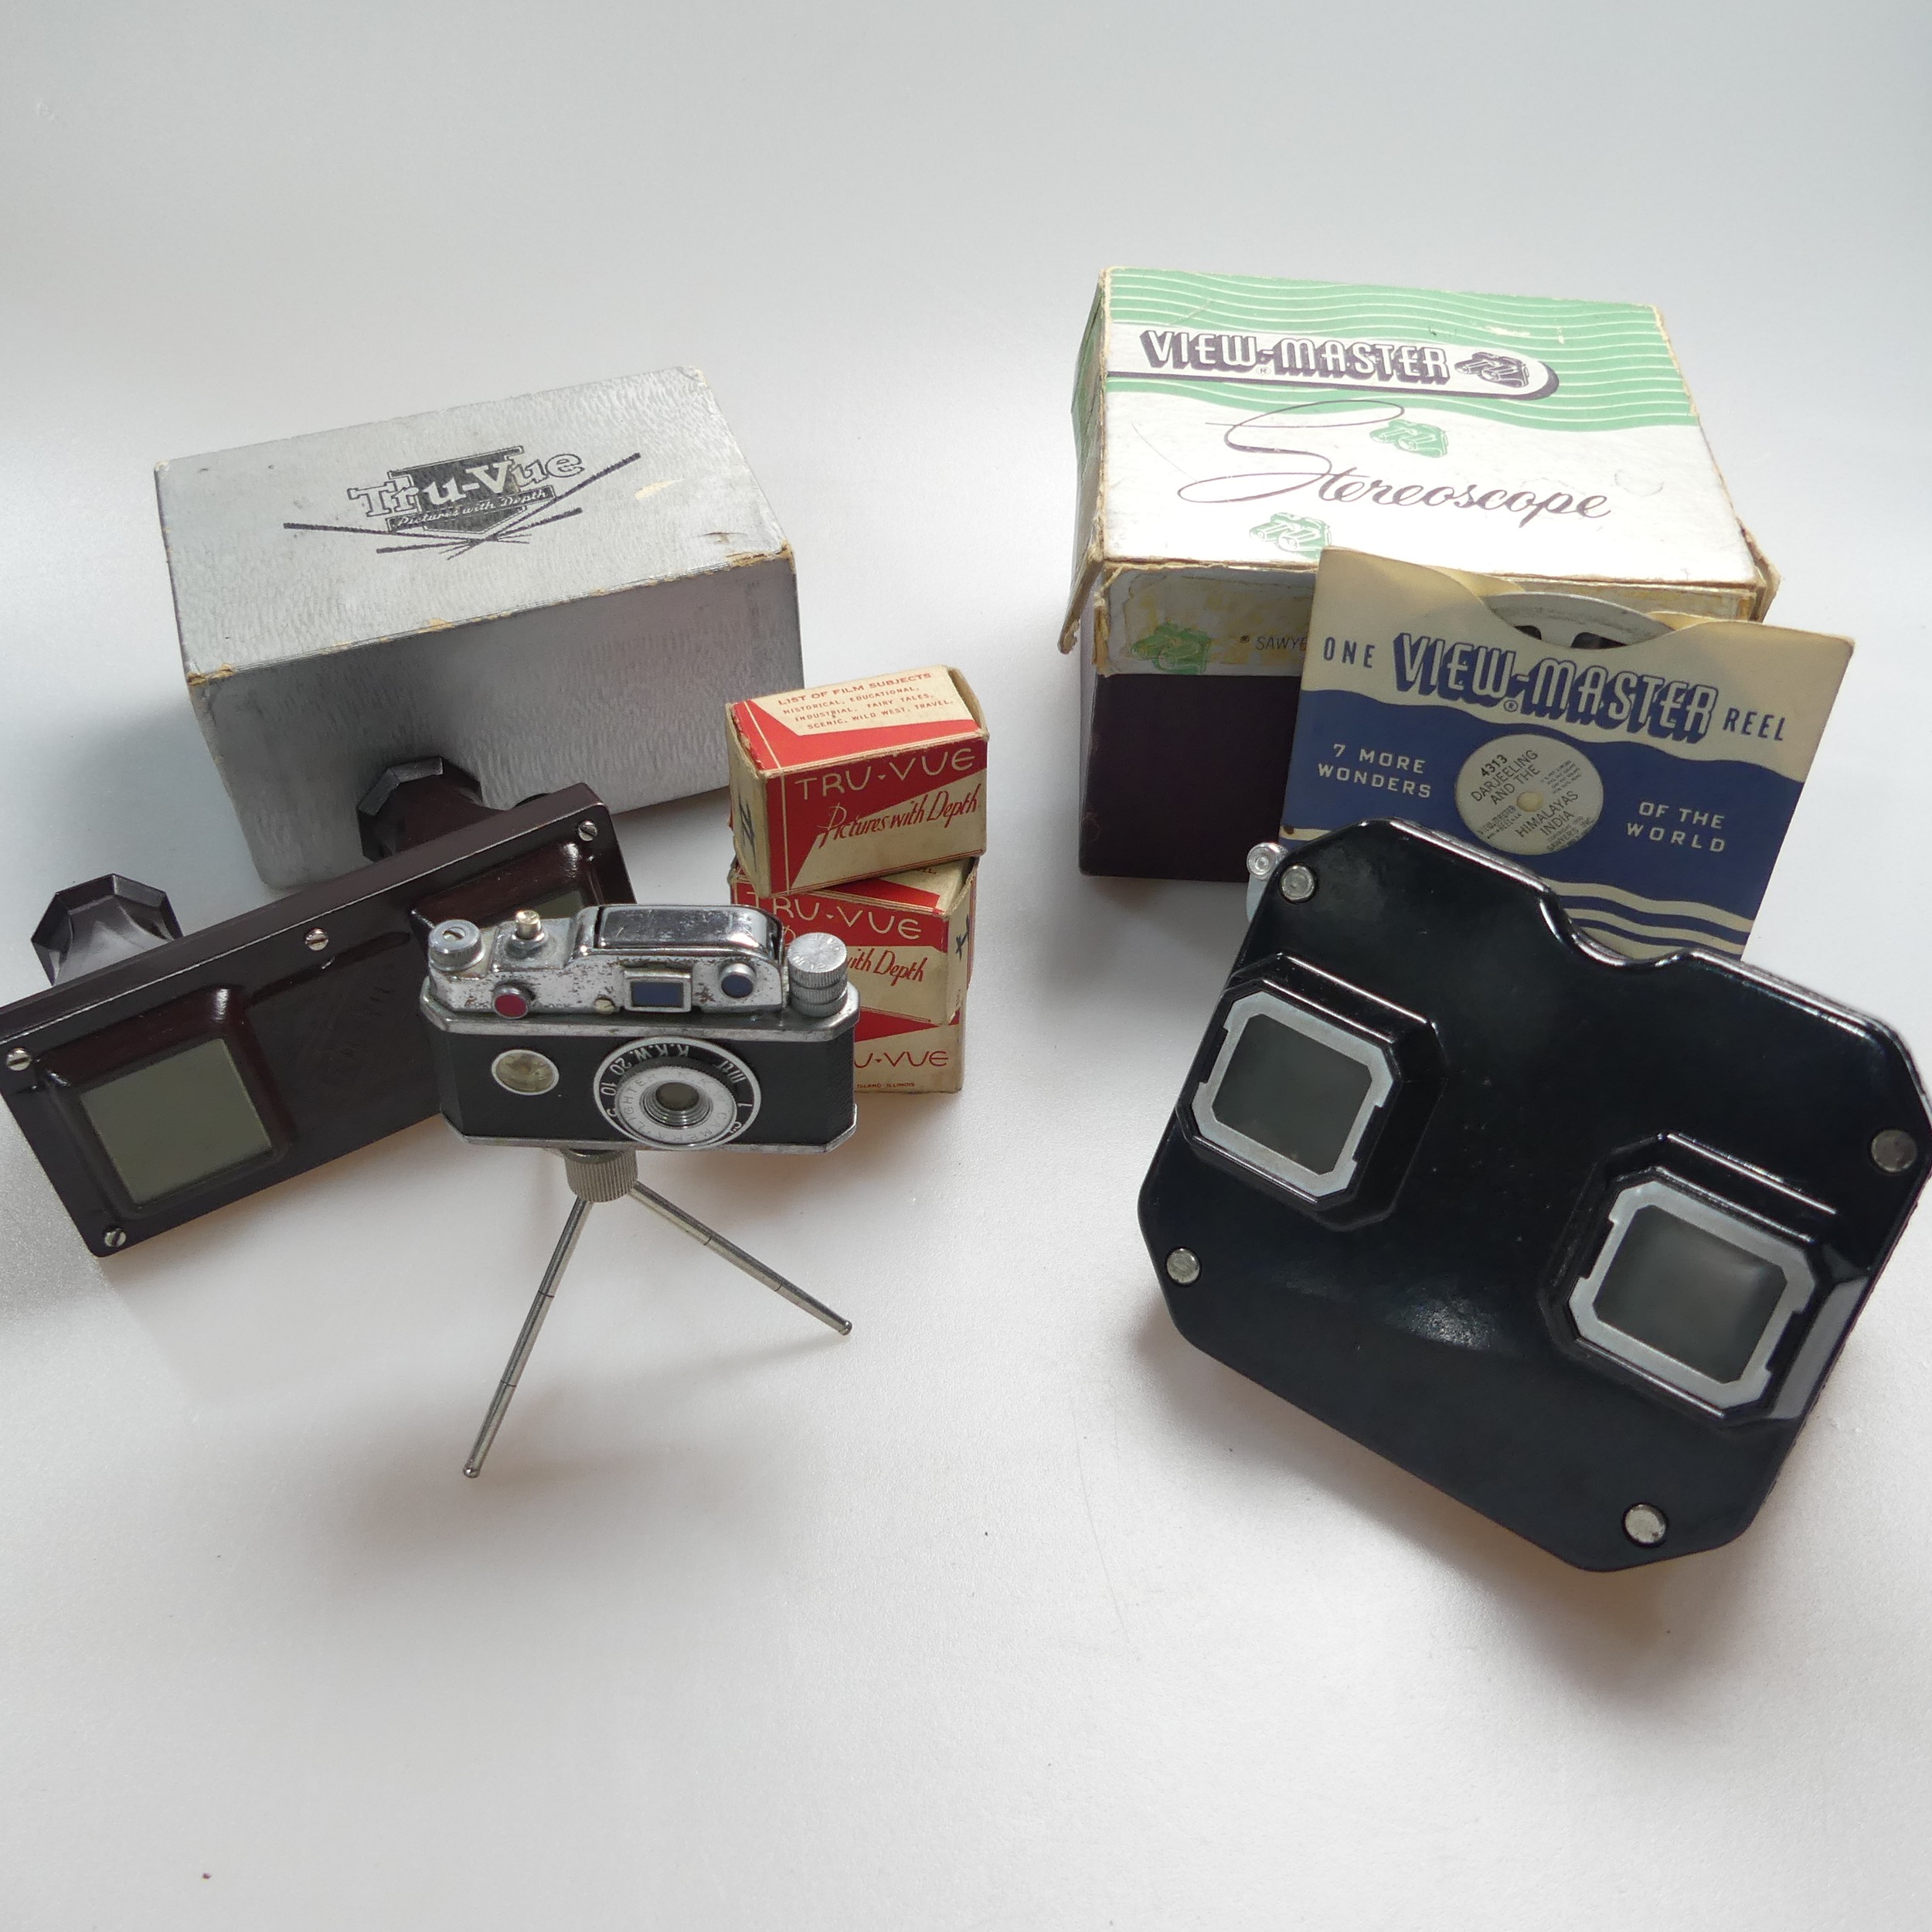 K.K.W. novelty miniature Camera Lighter on tripod, H: 9cm, including tripod, together with a vintage